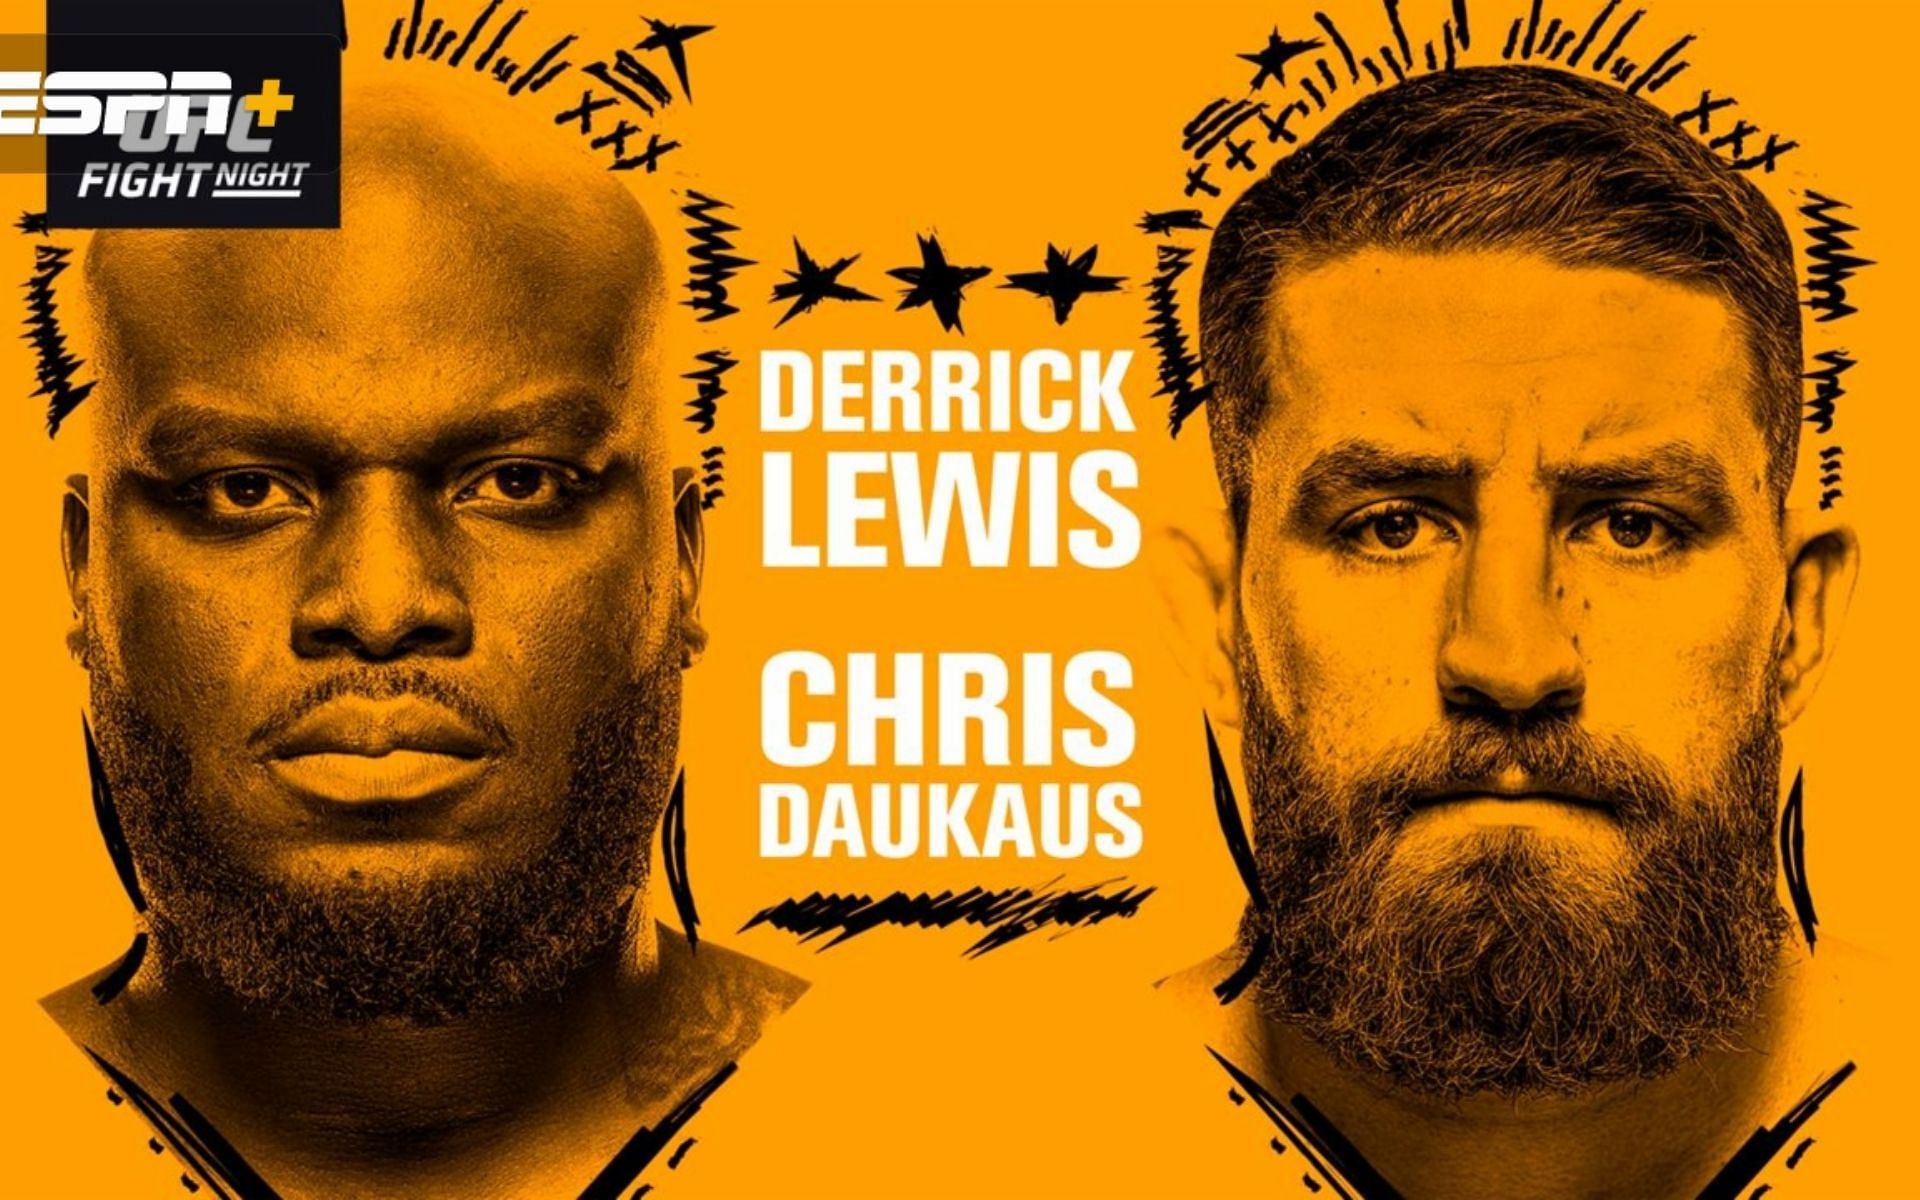 Derrick Lewis vs Chris Daukaus purse